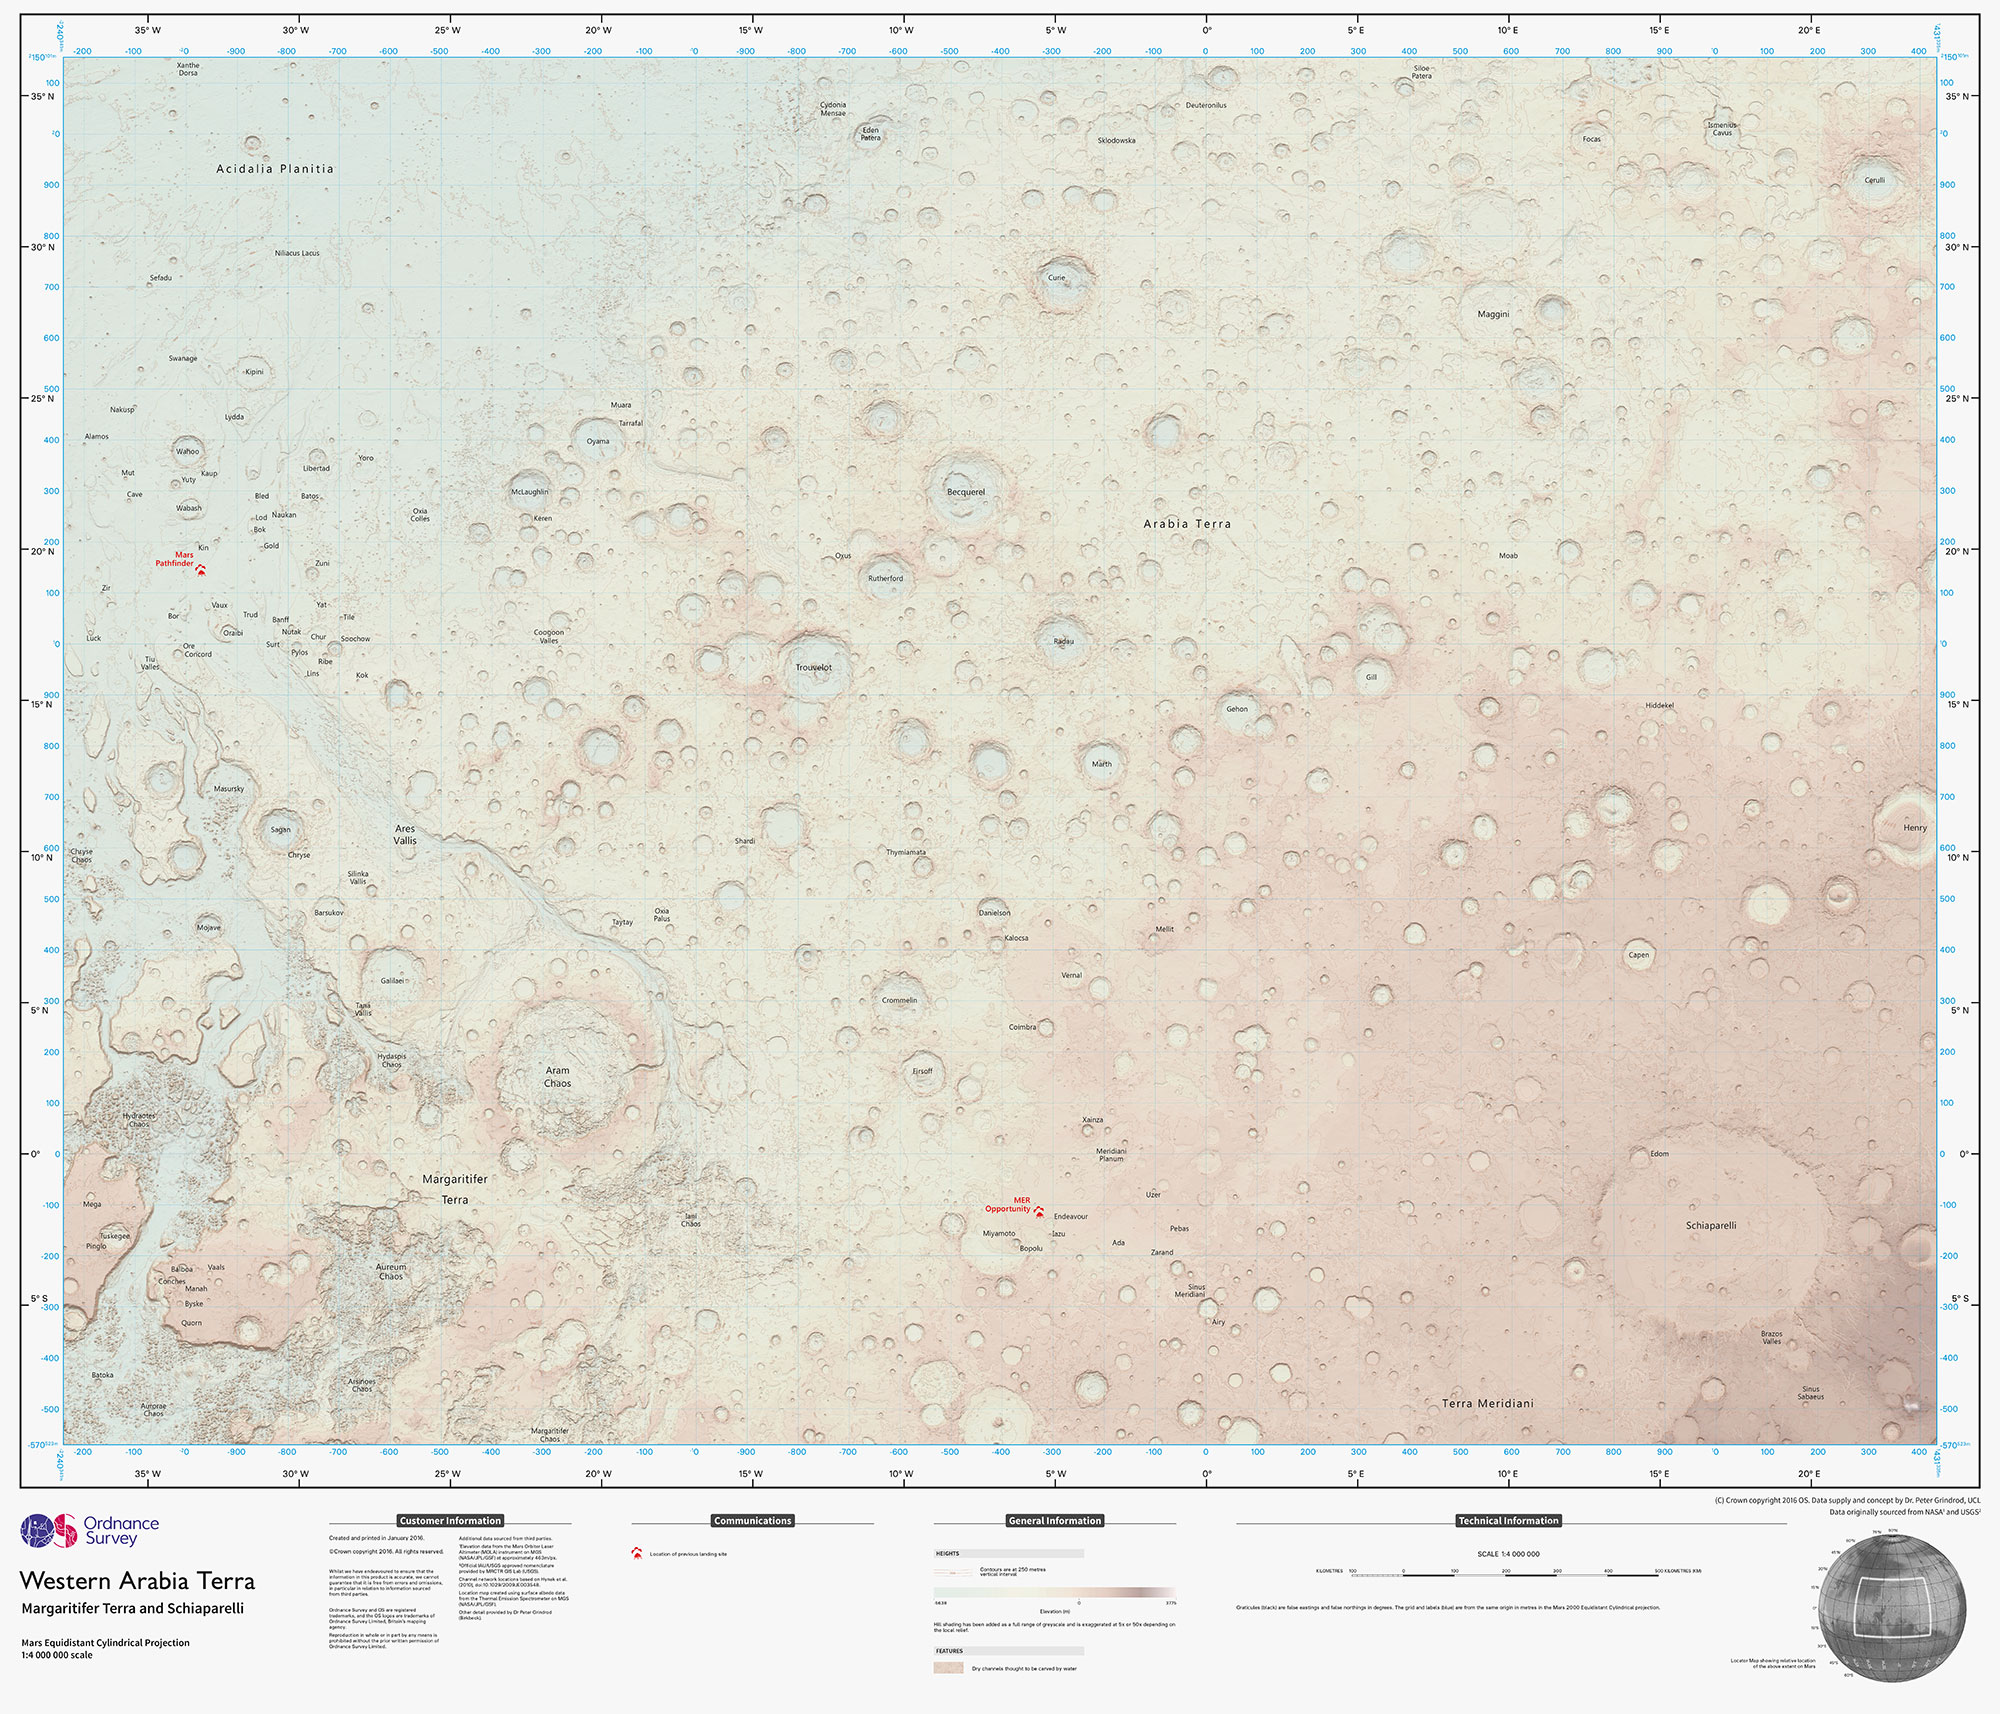 The Ordnance Survey map of Mars